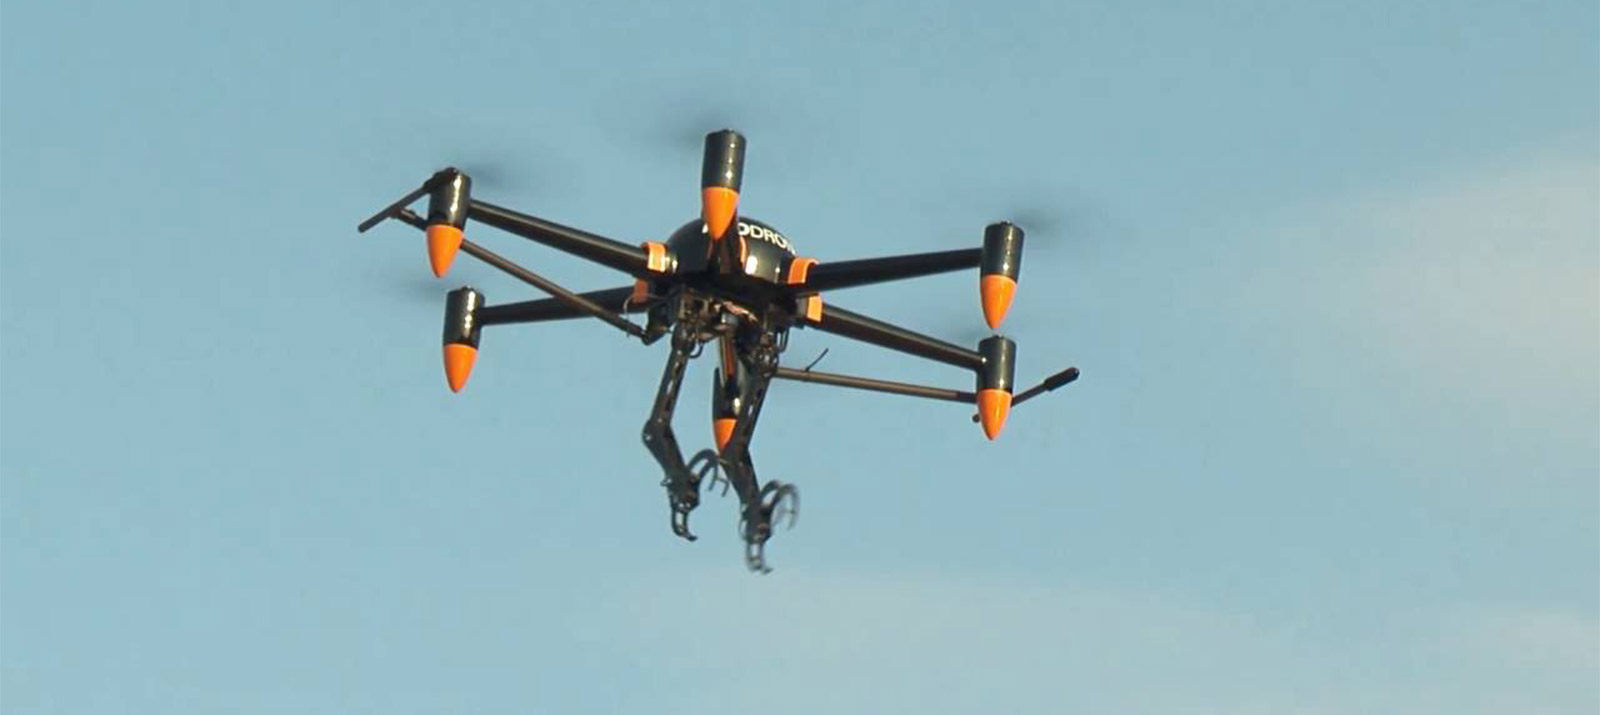 Летающие роботы примеры. 4drc квадрокоптер. Дрон 4drc v4. 4a1100 дрон. Грузовой дрон 100кг.